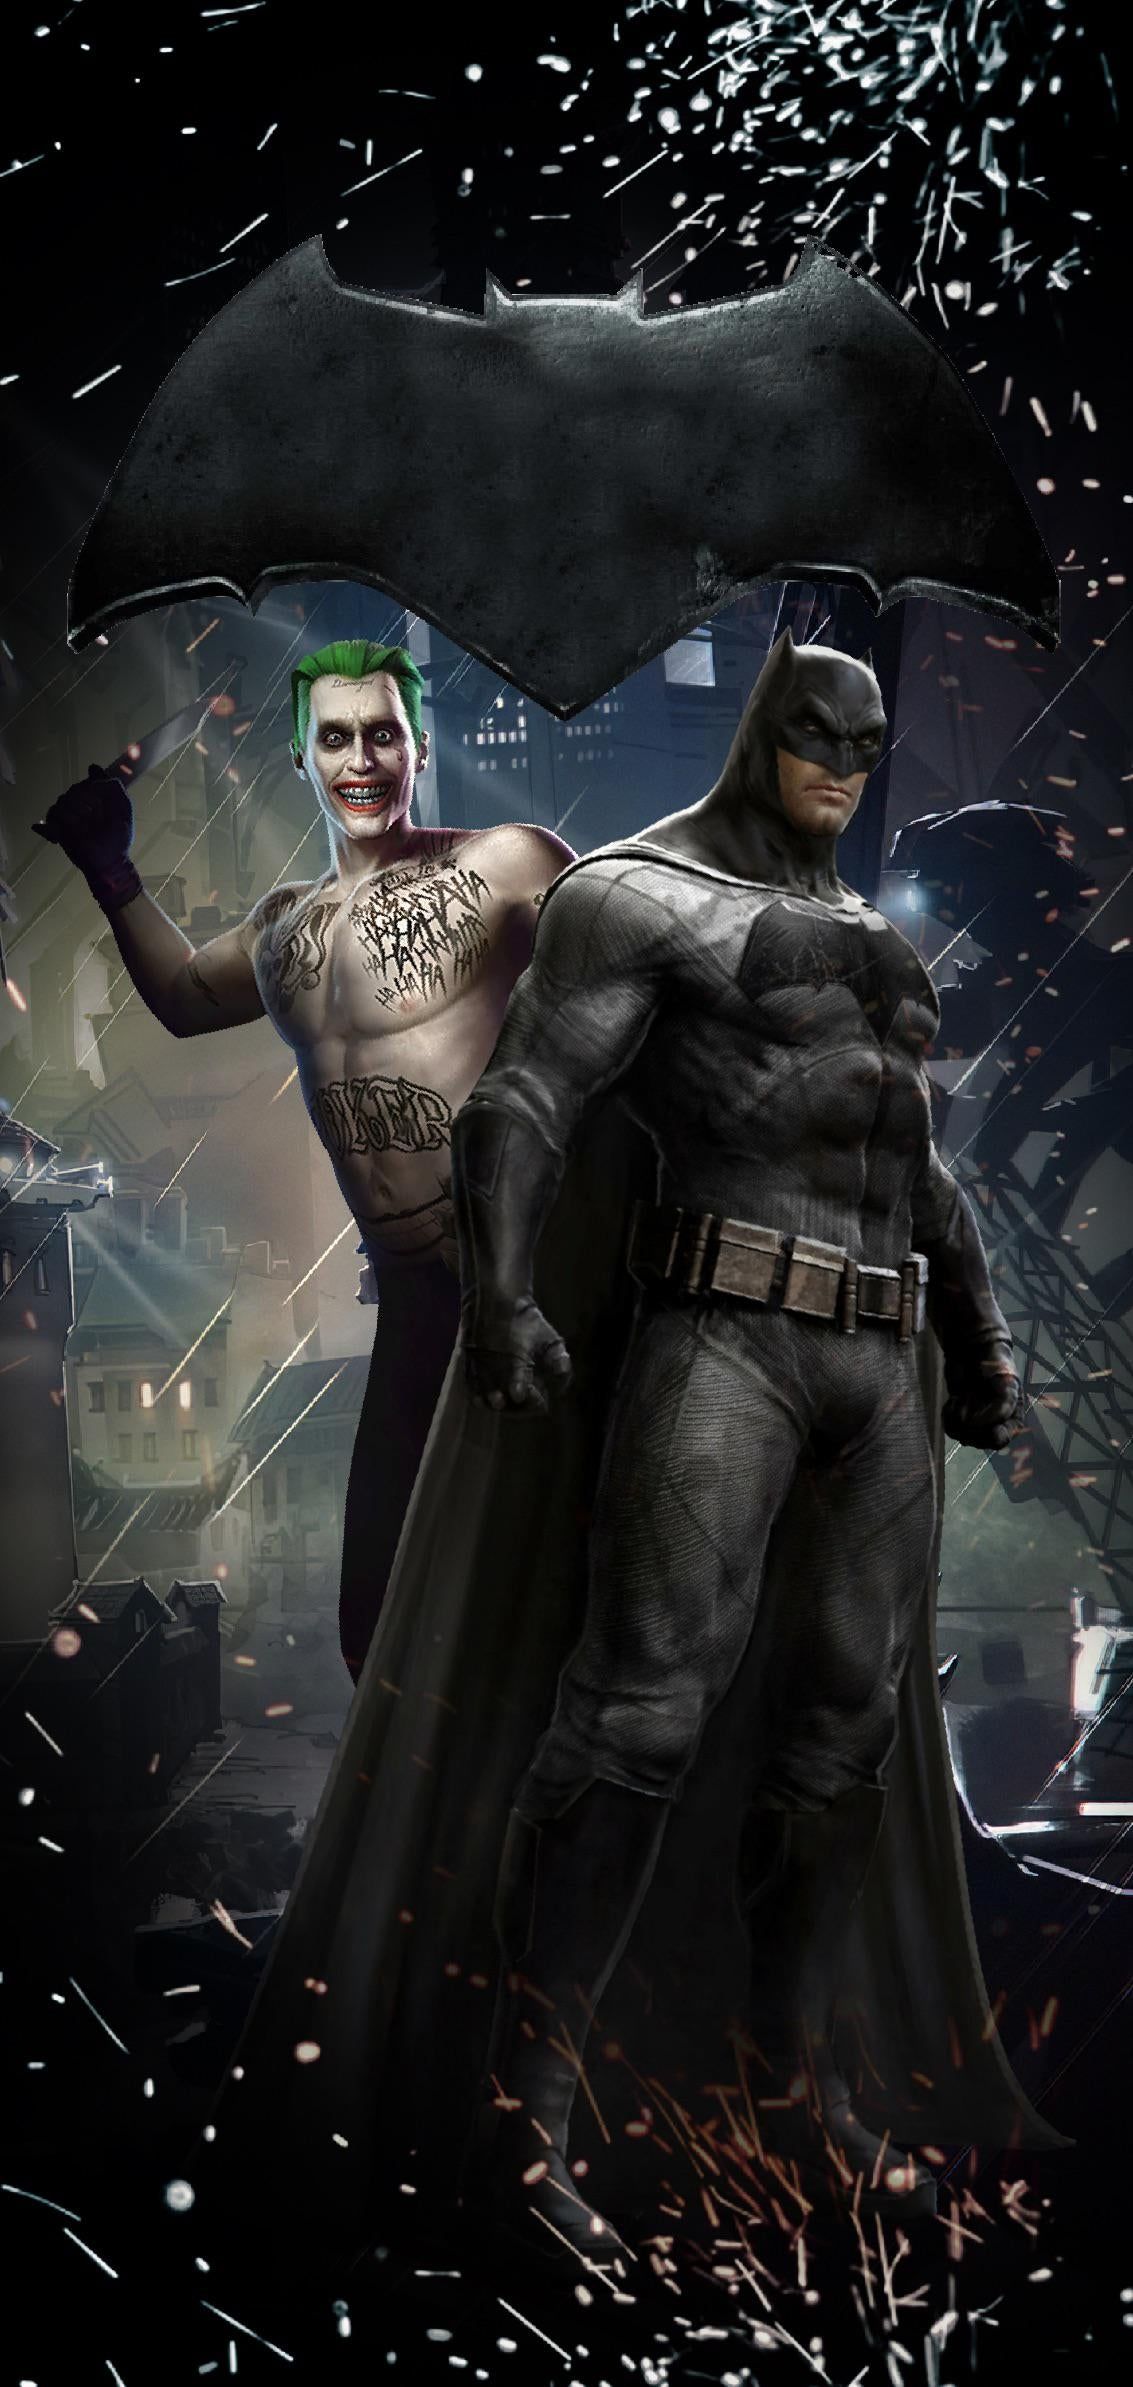 Unofficial Batman iPhone Lock Screen wallpaper (Fan Art)